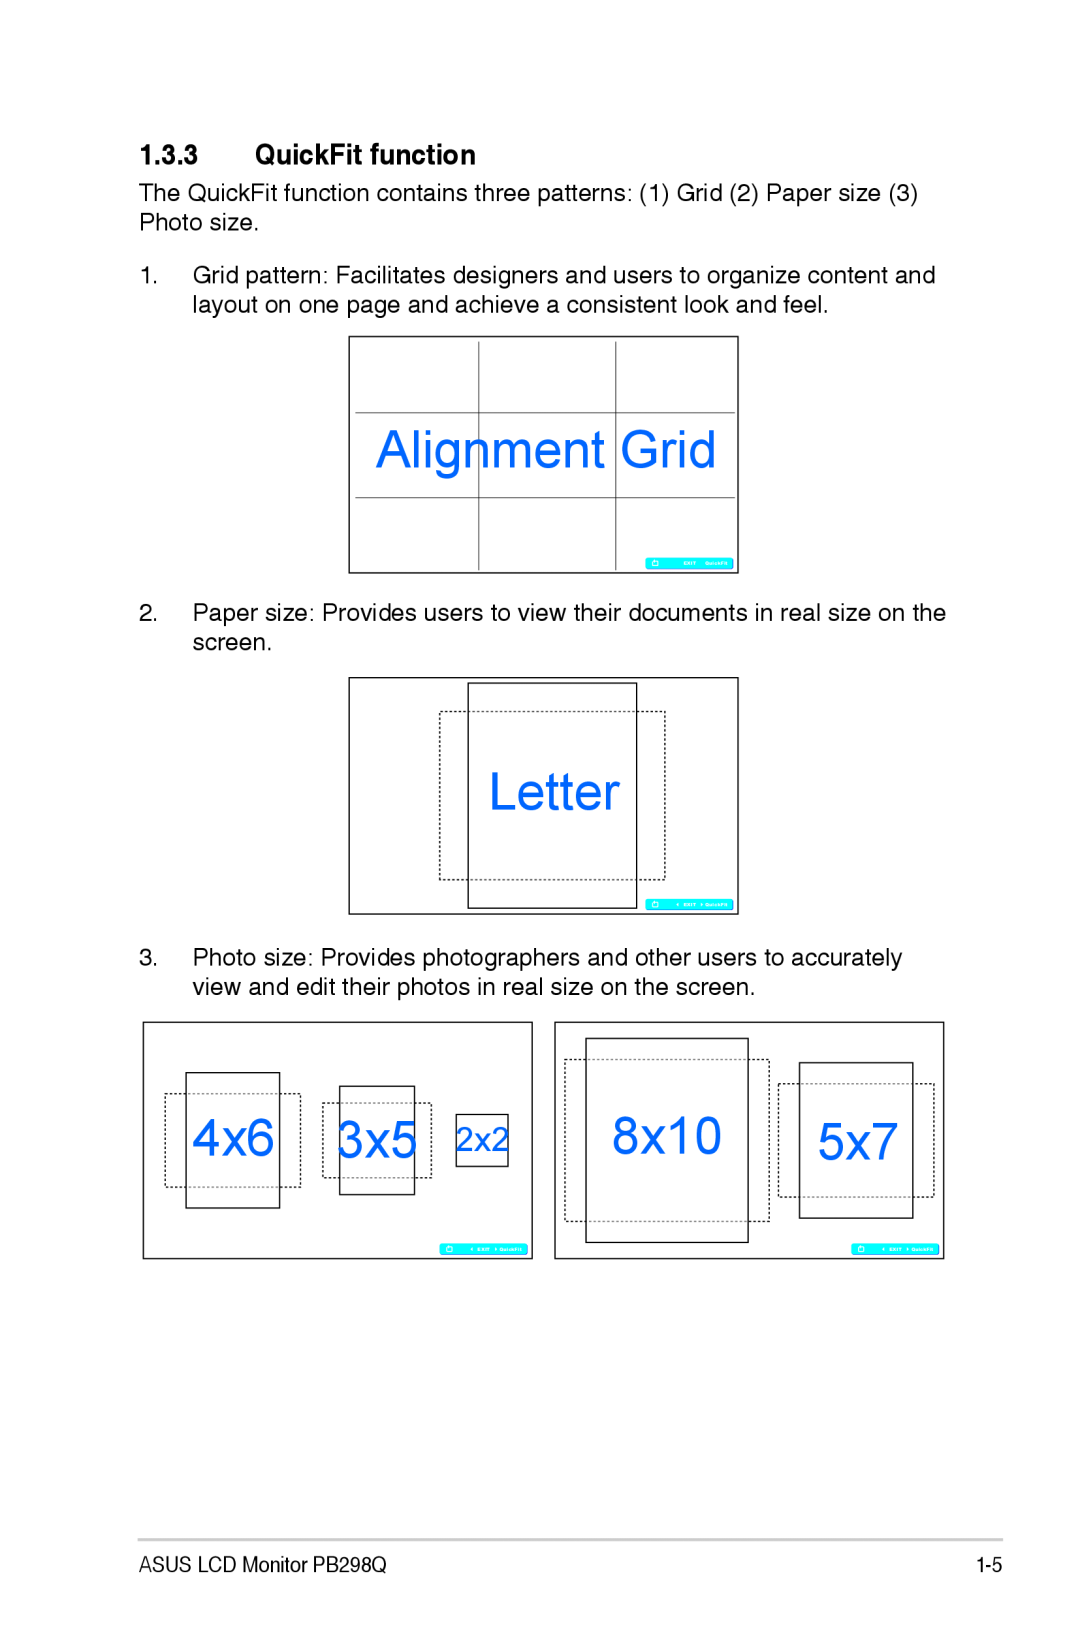 Asus PB298Q manual QuickFit function, Alignment Grid, Letter, 8x10 